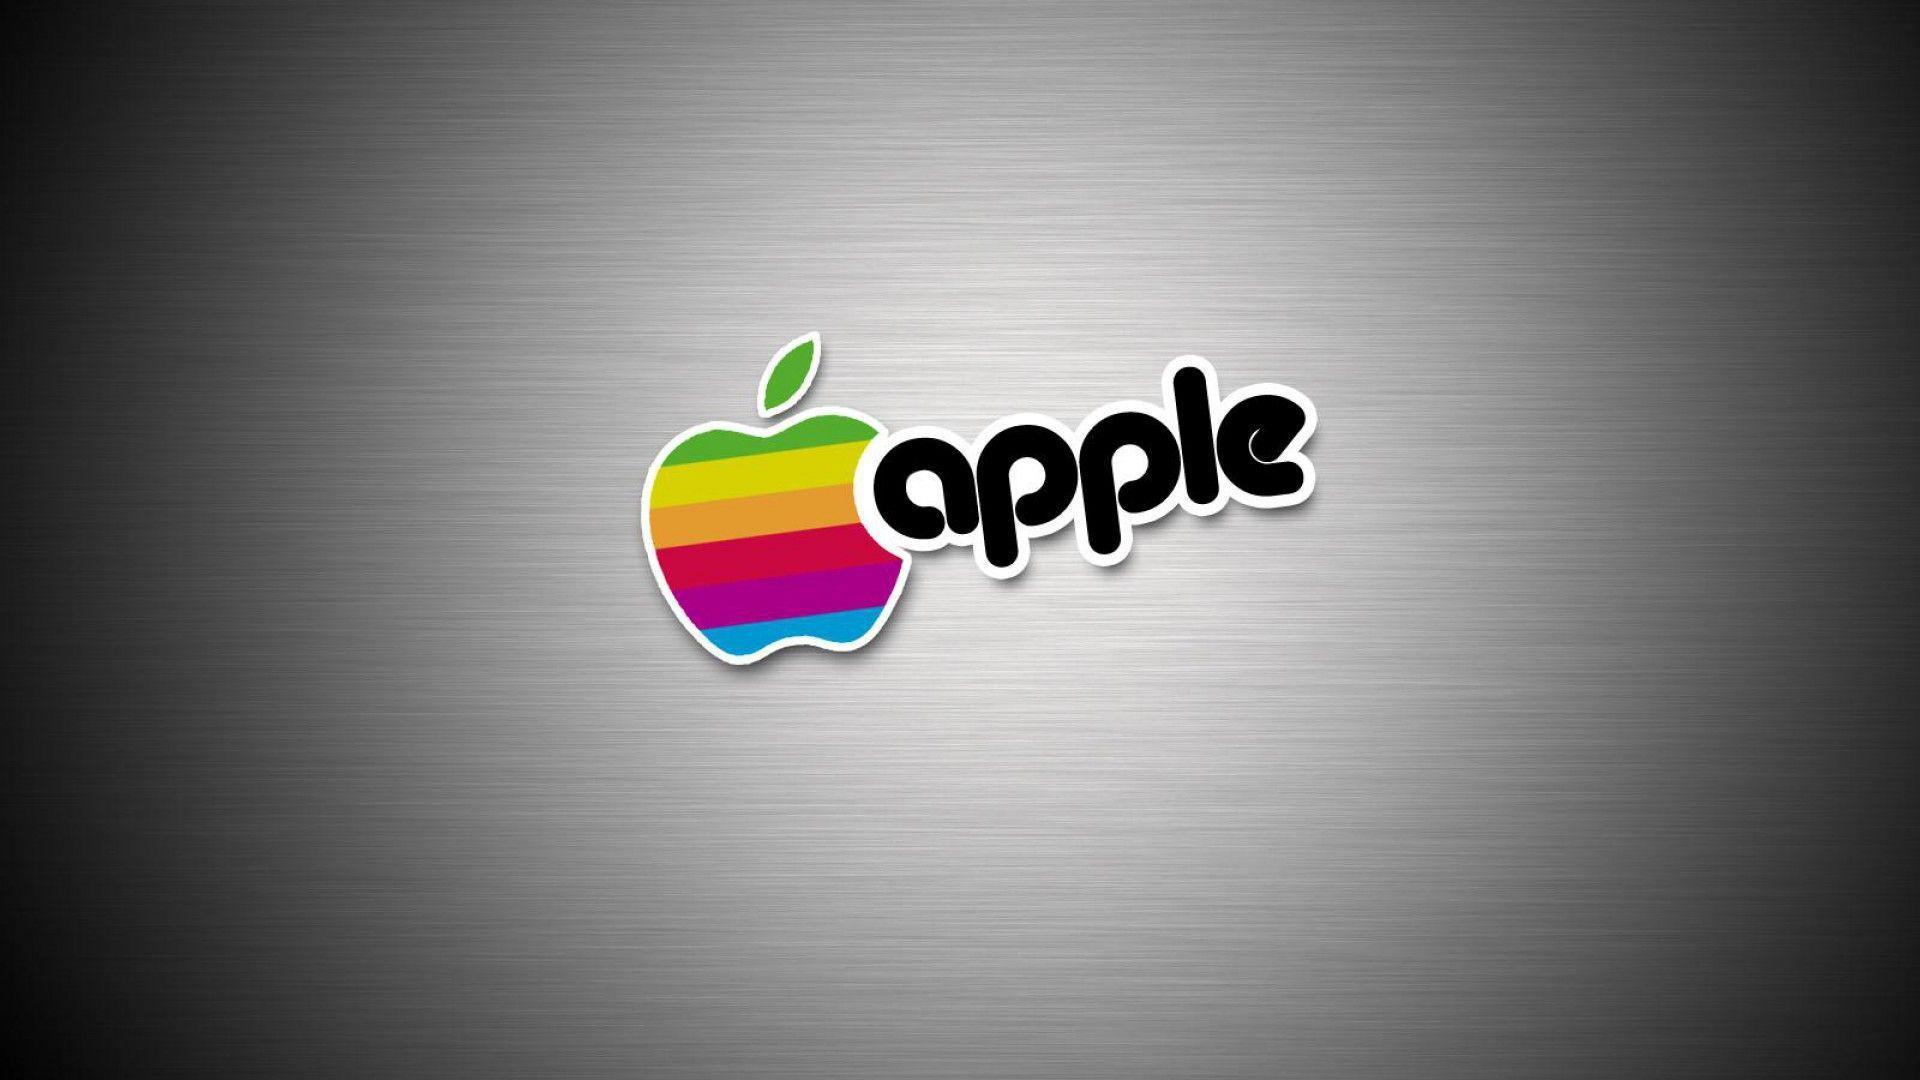 Apple Logo 6 HD Image Wallpaper. HD Image Wallpaper